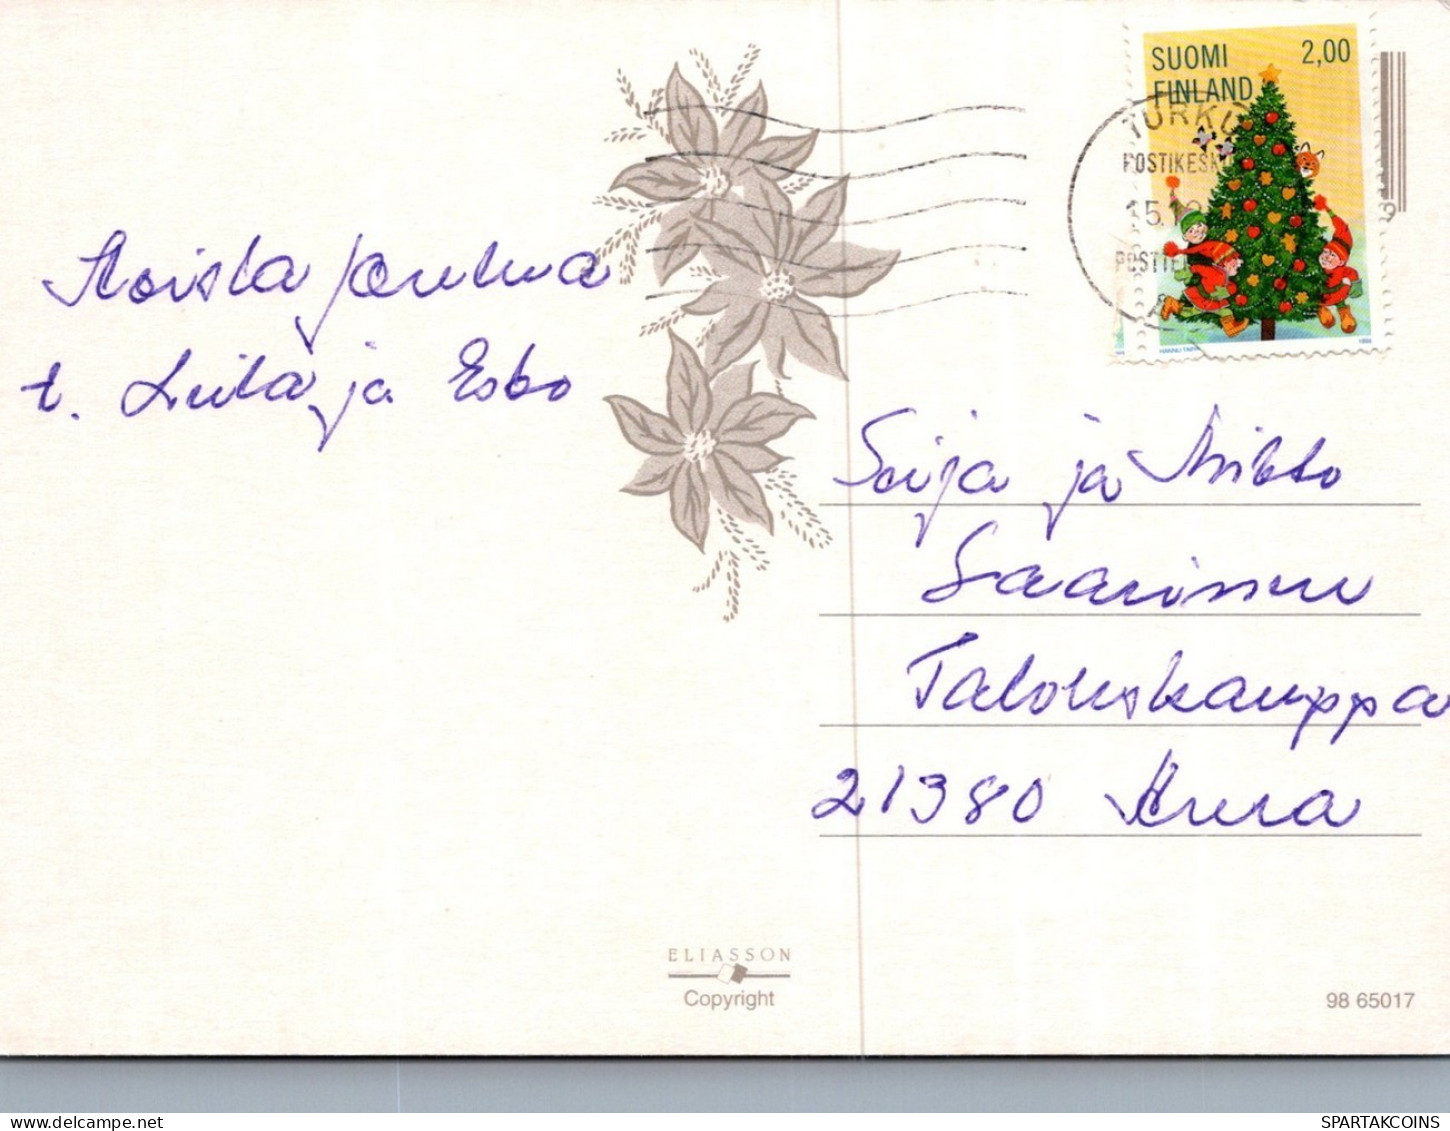 BABBO NATALE Animale Natale Vintage Cartolina CPSM #PAK521.A - Santa Claus